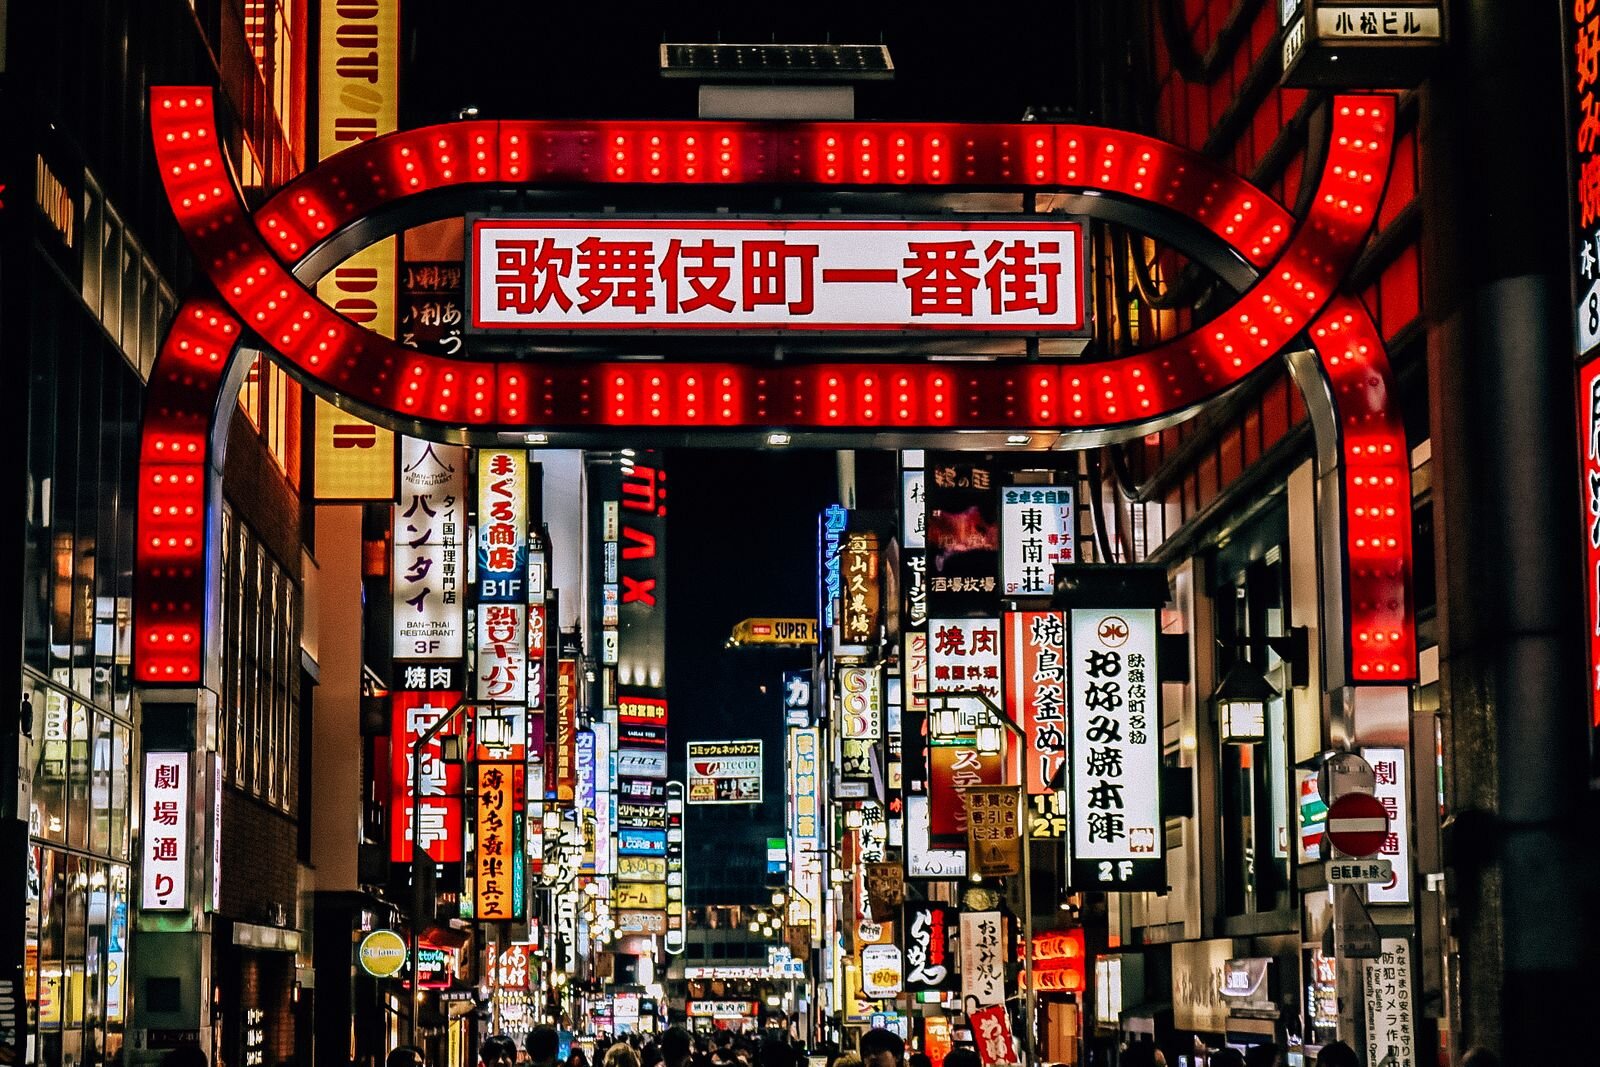 The bright signs lining the busy street of Shinjuku at night, Tokyo